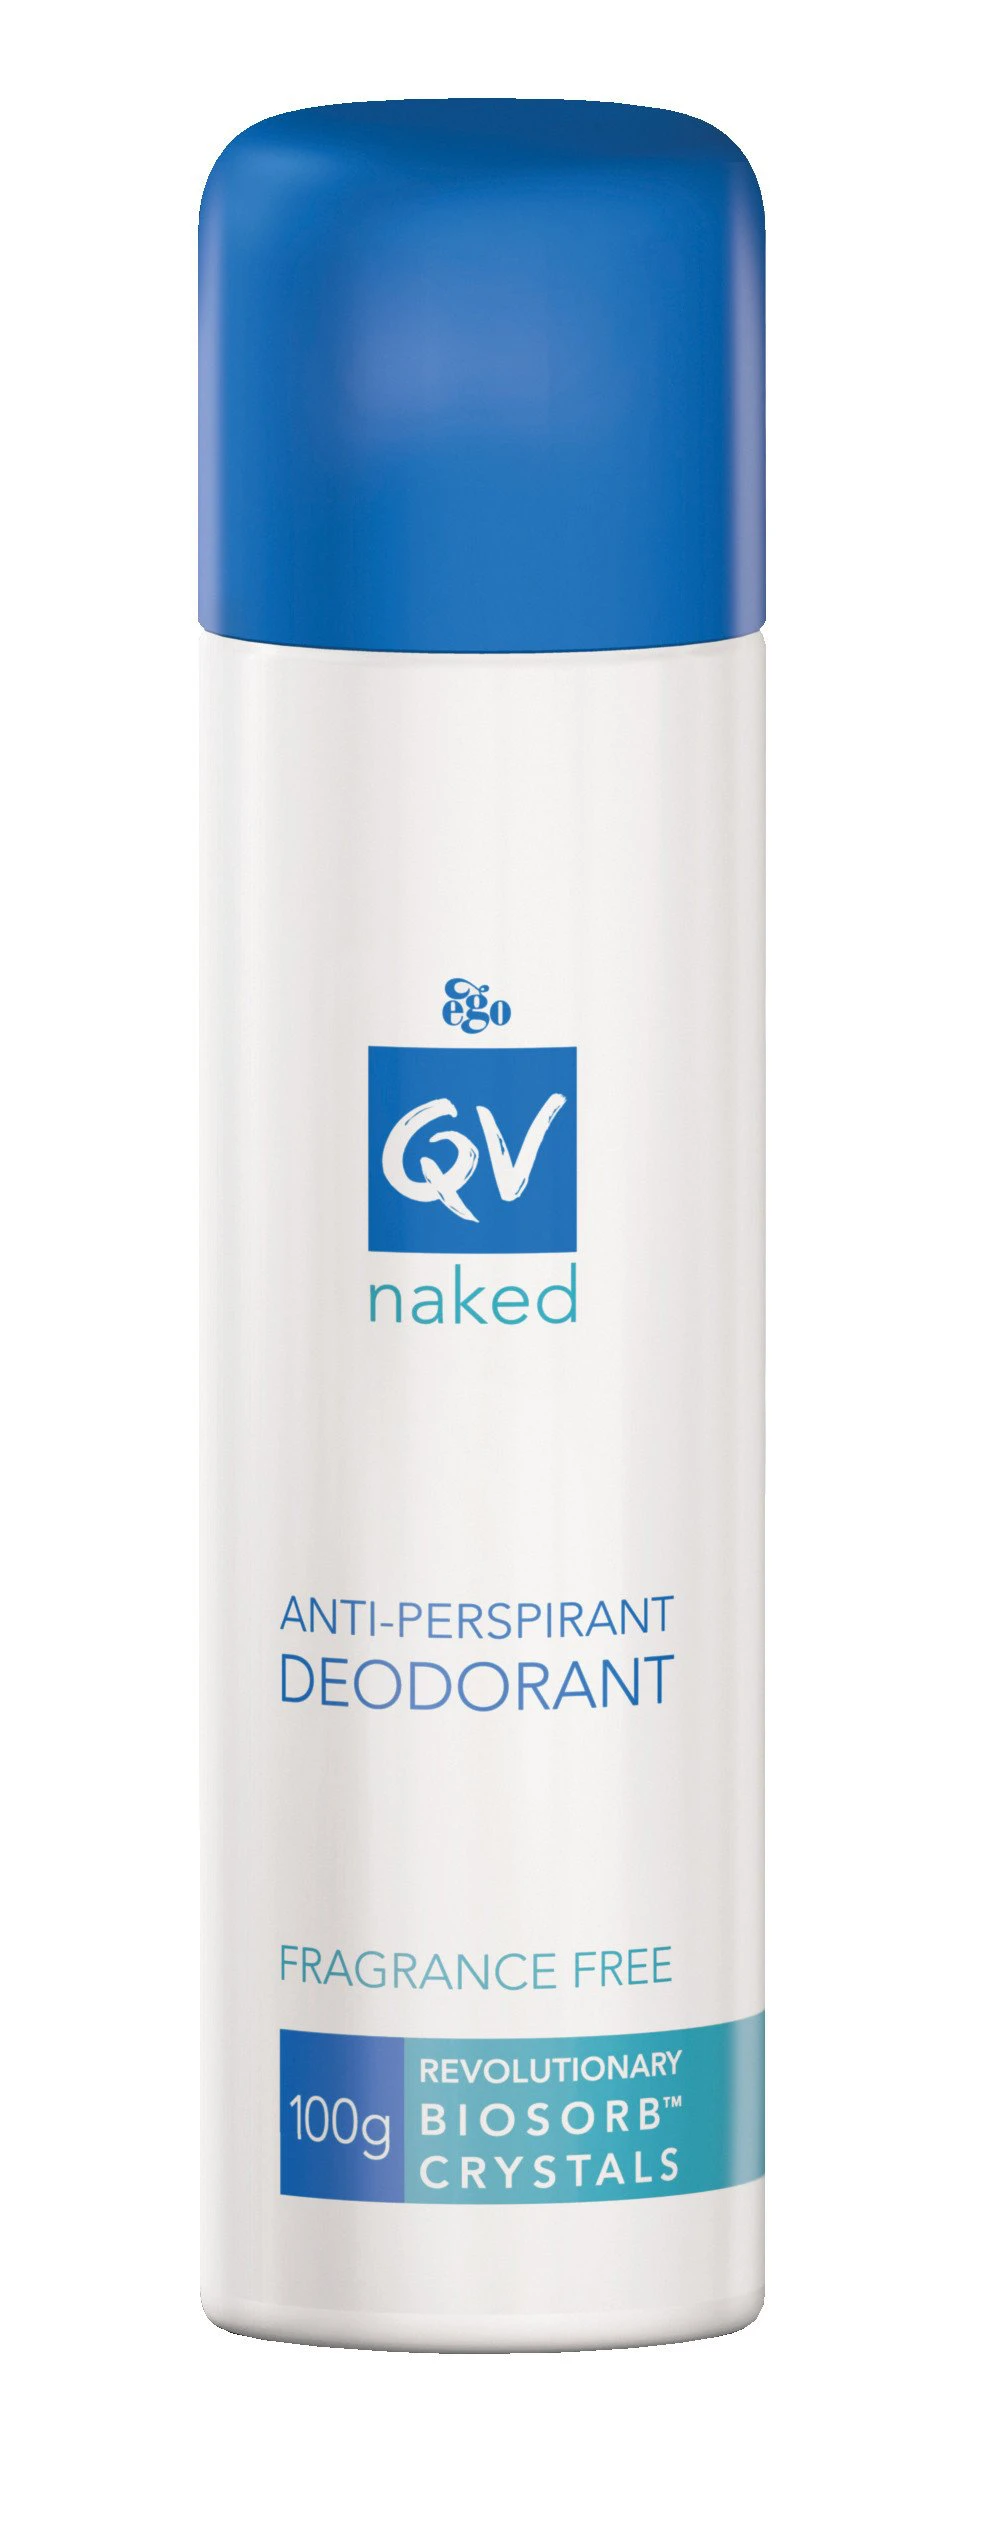 naked anti perspirant deodorant